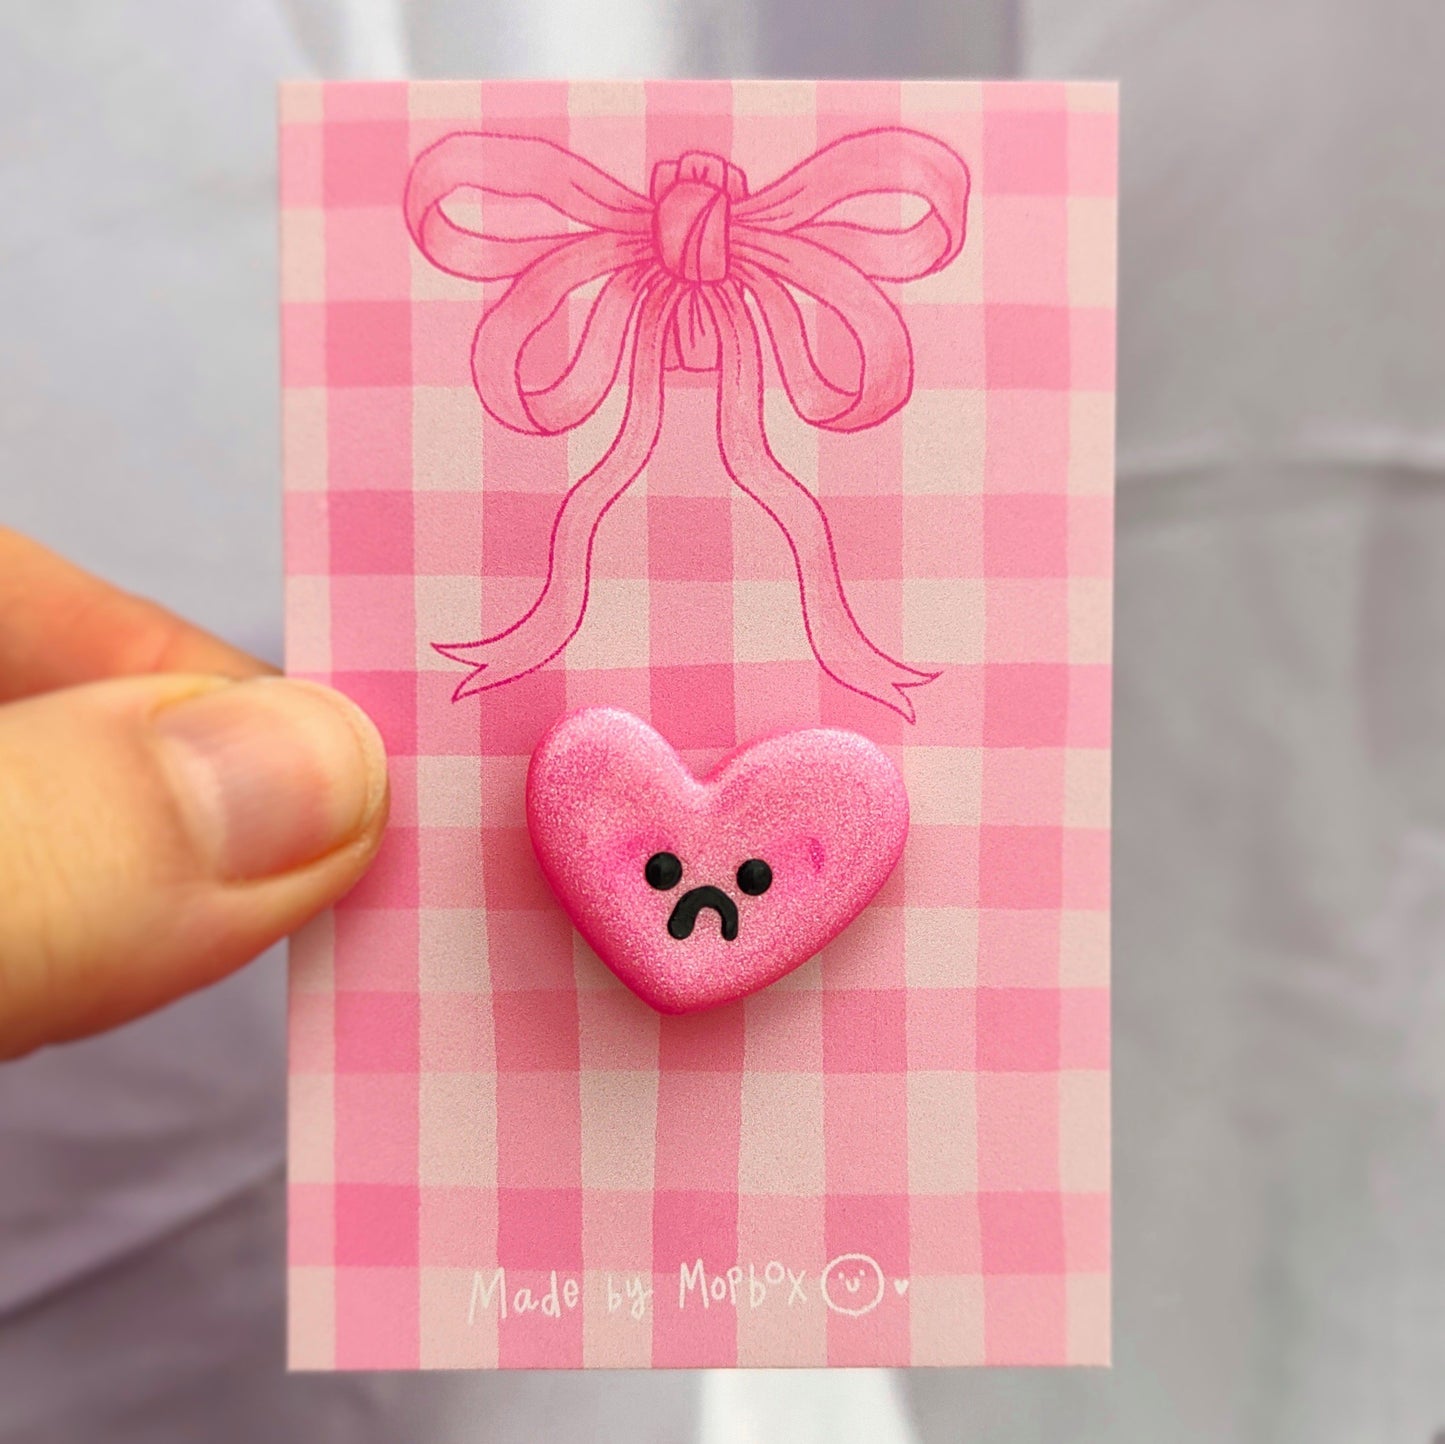 Love Heart Handmade Pin Badge -Worried Heart in Pink